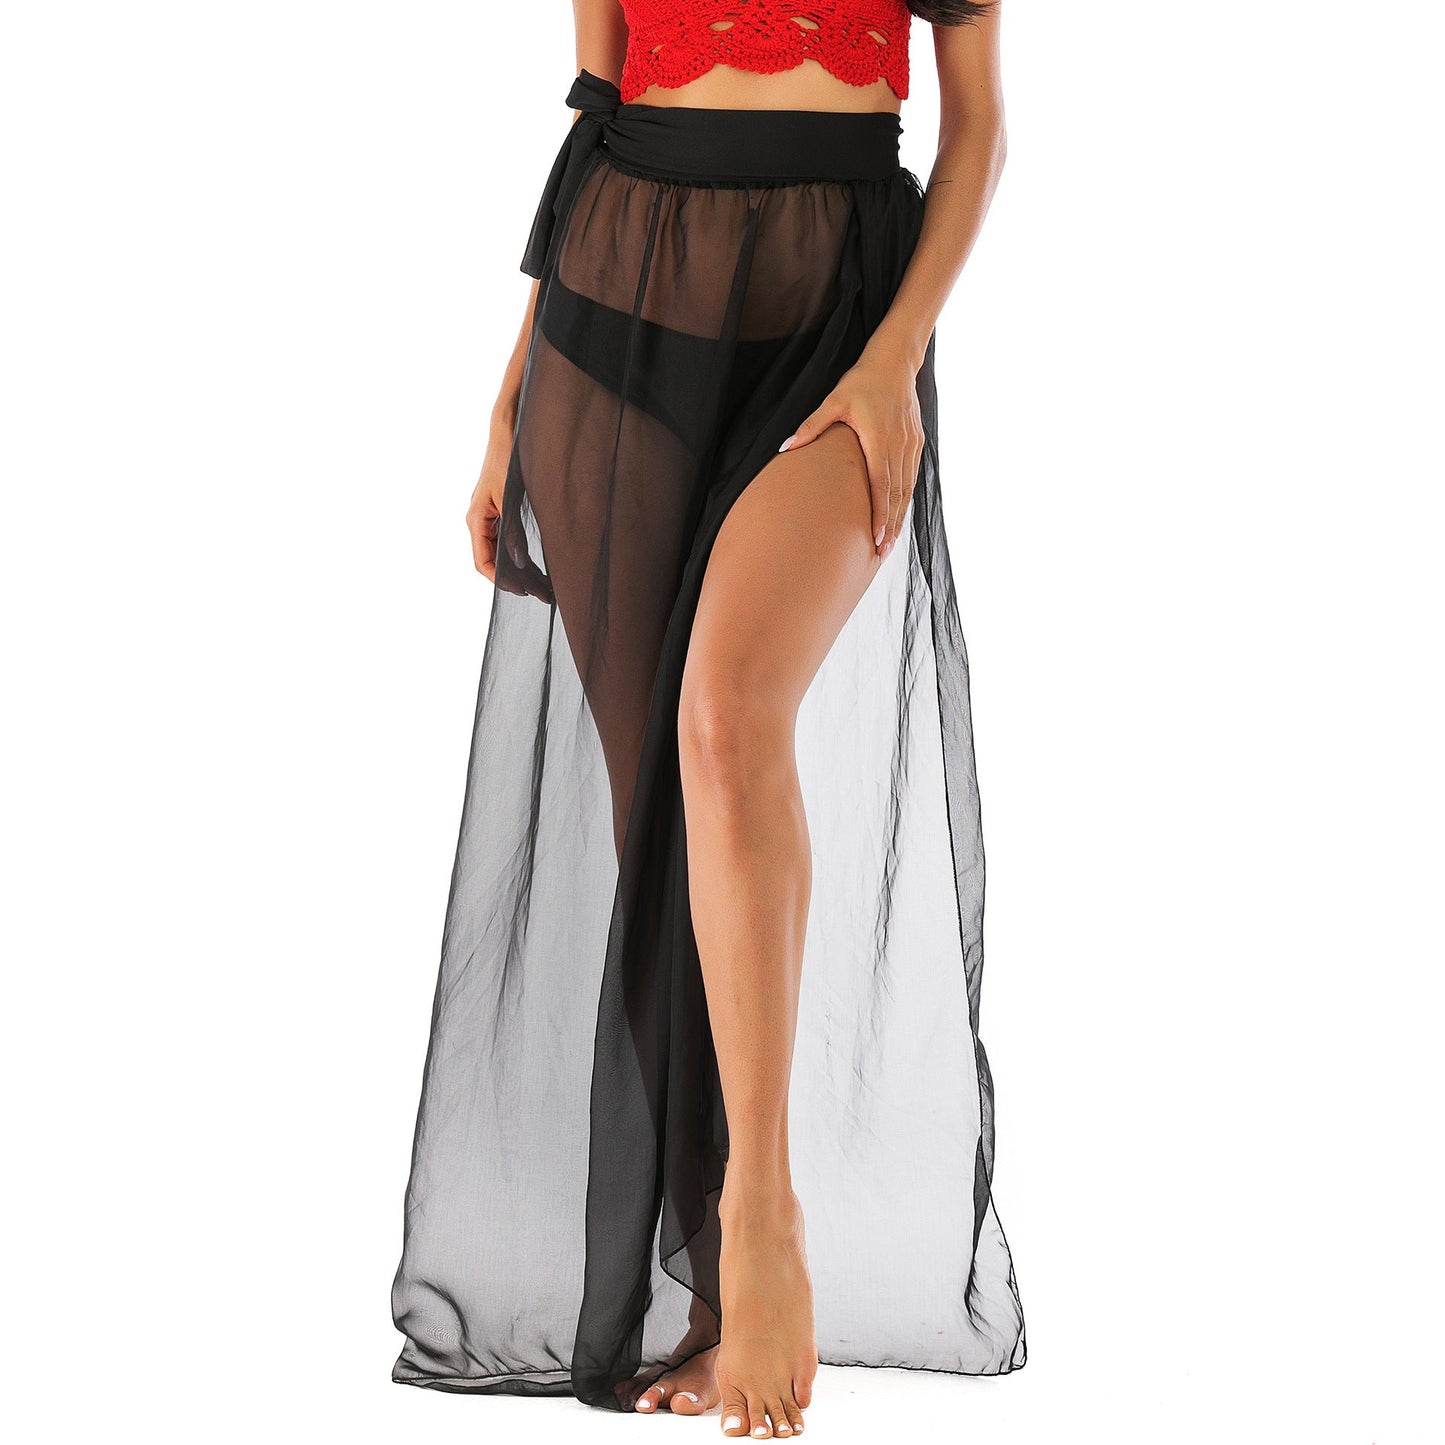 Black Irregular Chiffon See Throught Summer Beach Skirts-Swimwear-Free Shipping at meselling99